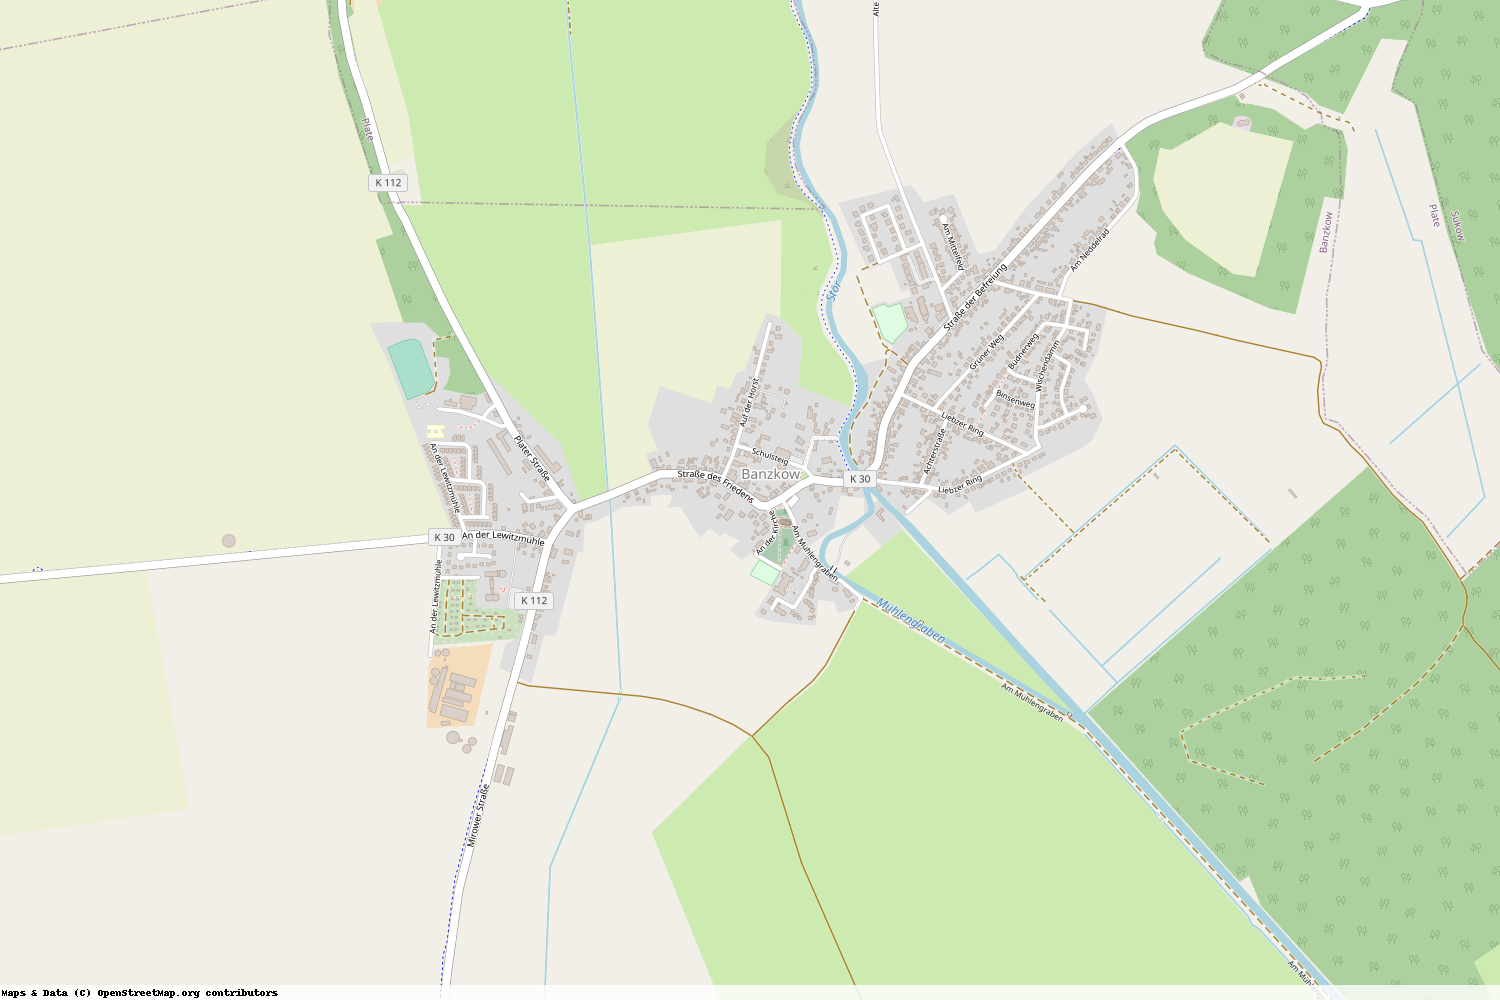 Ist gerade Stromausfall in Mecklenburg-Vorpommern - Ludwigslust-Parchim - Banzkow?